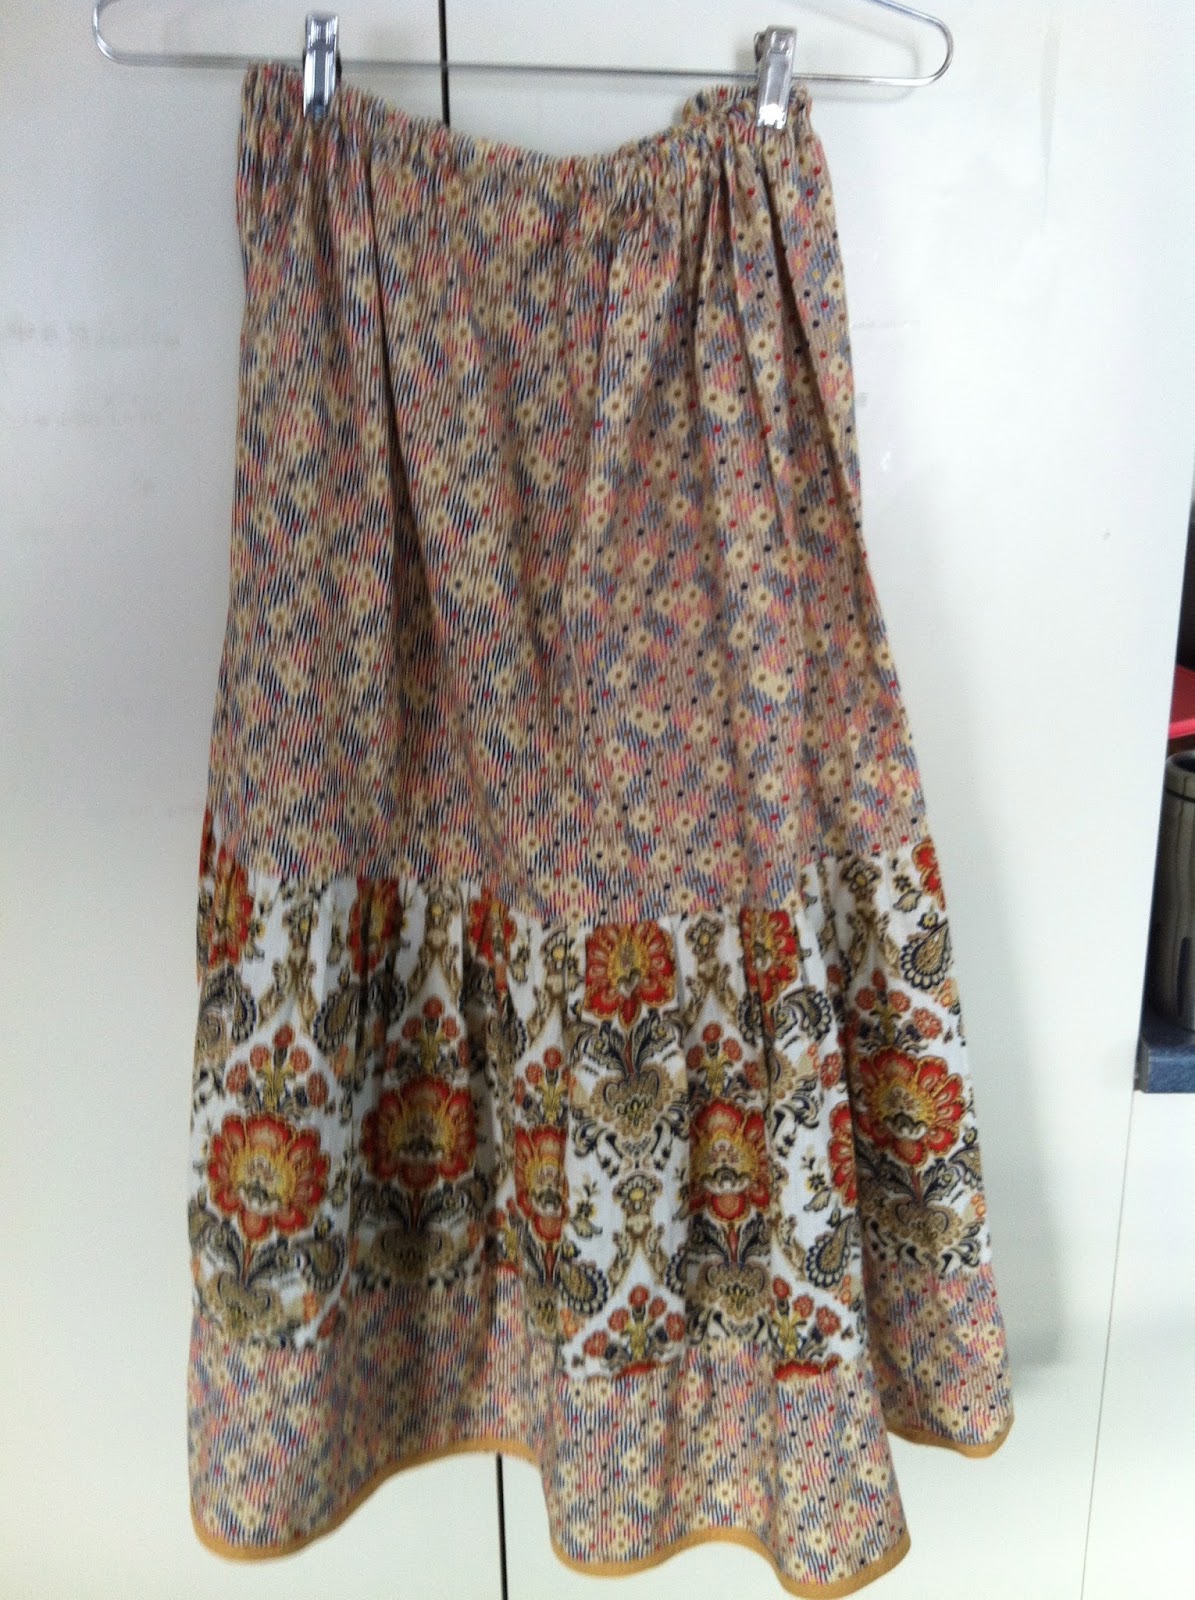 Girard Portfolio: Making the Traditional Skirt